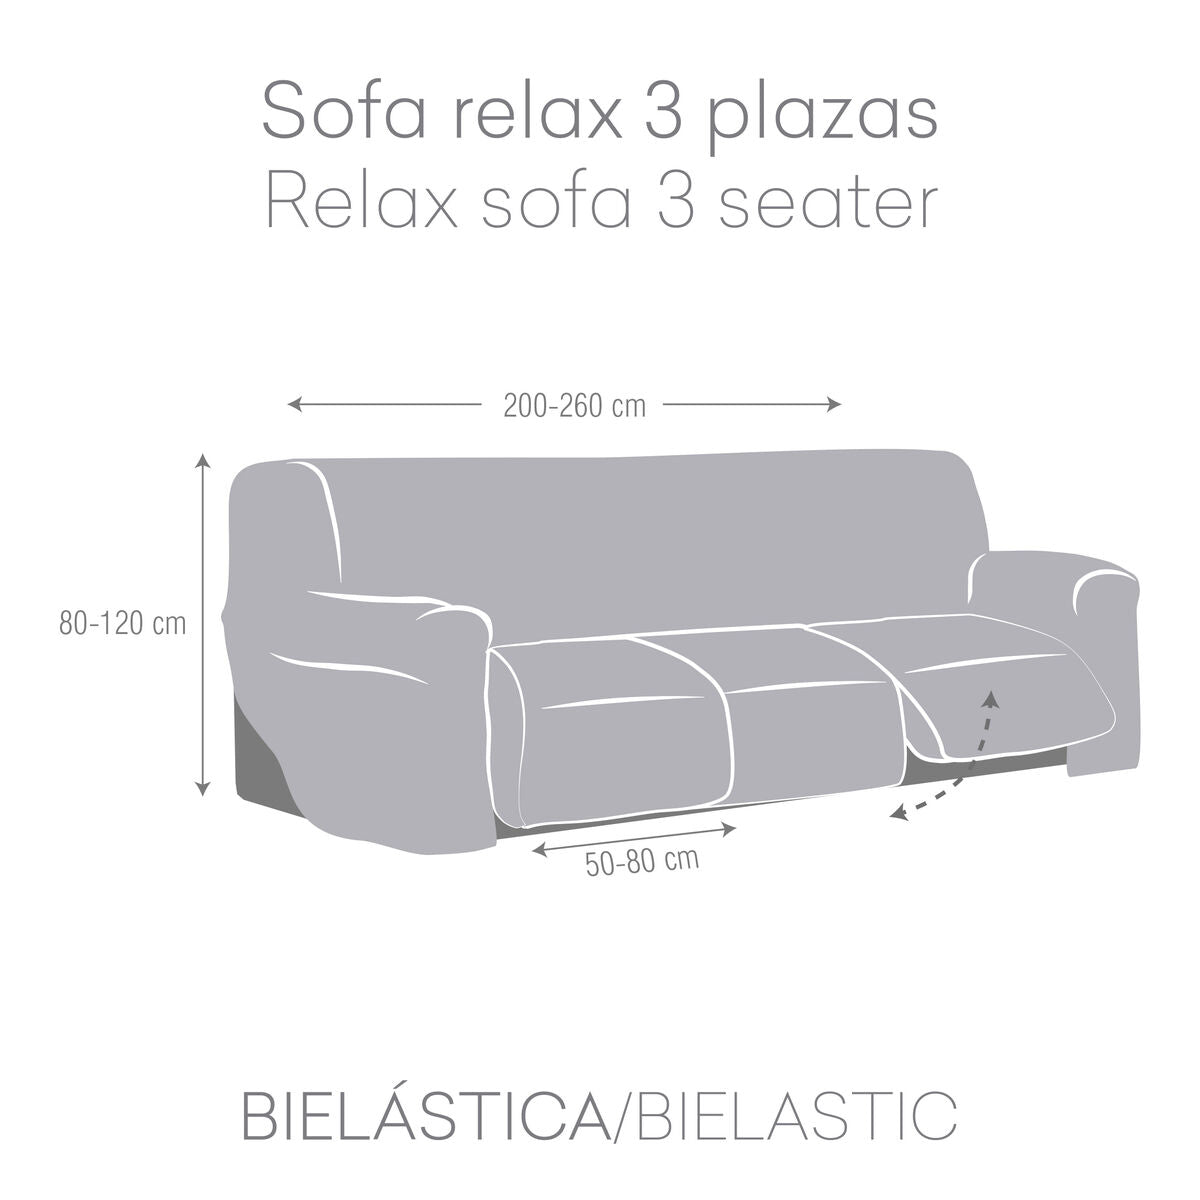 Copertina di divano marrone Eysa Jaz 70 x 120 x 260 cm